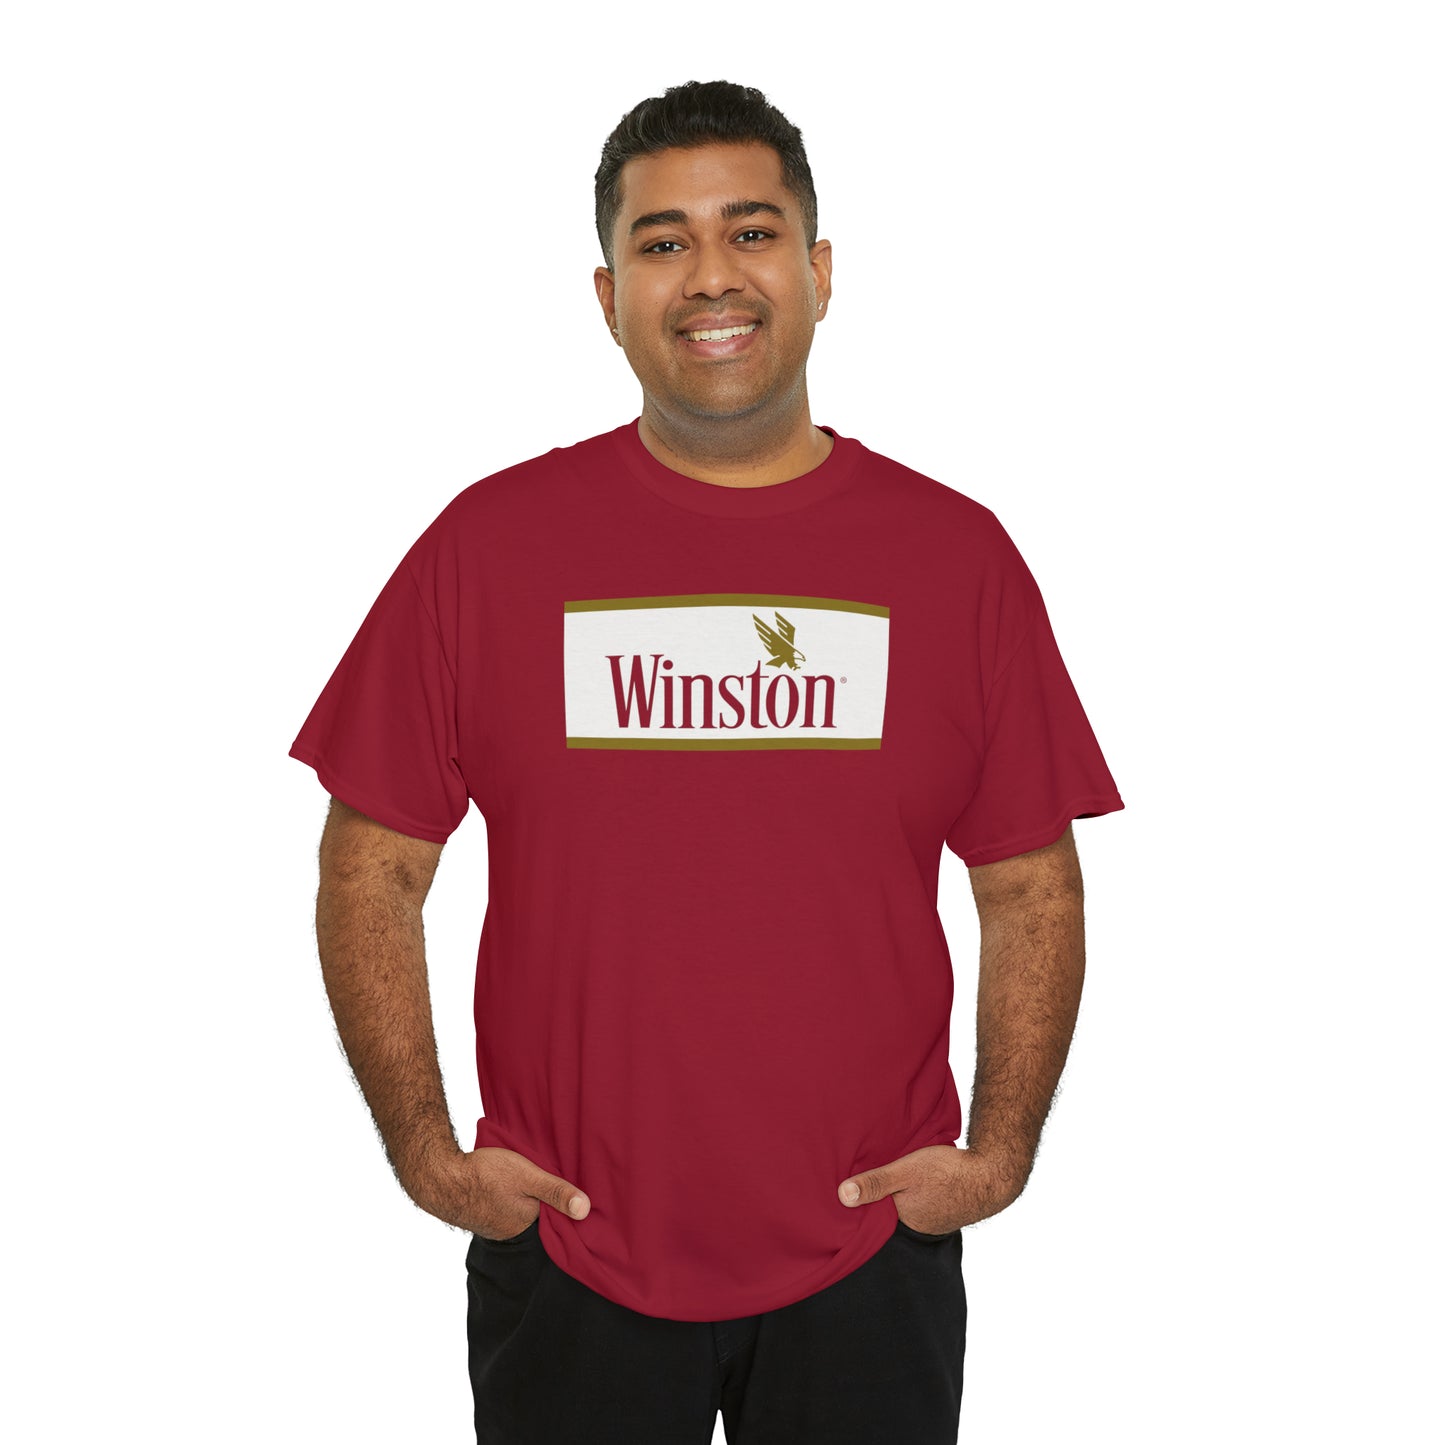 Winston T-Shirt